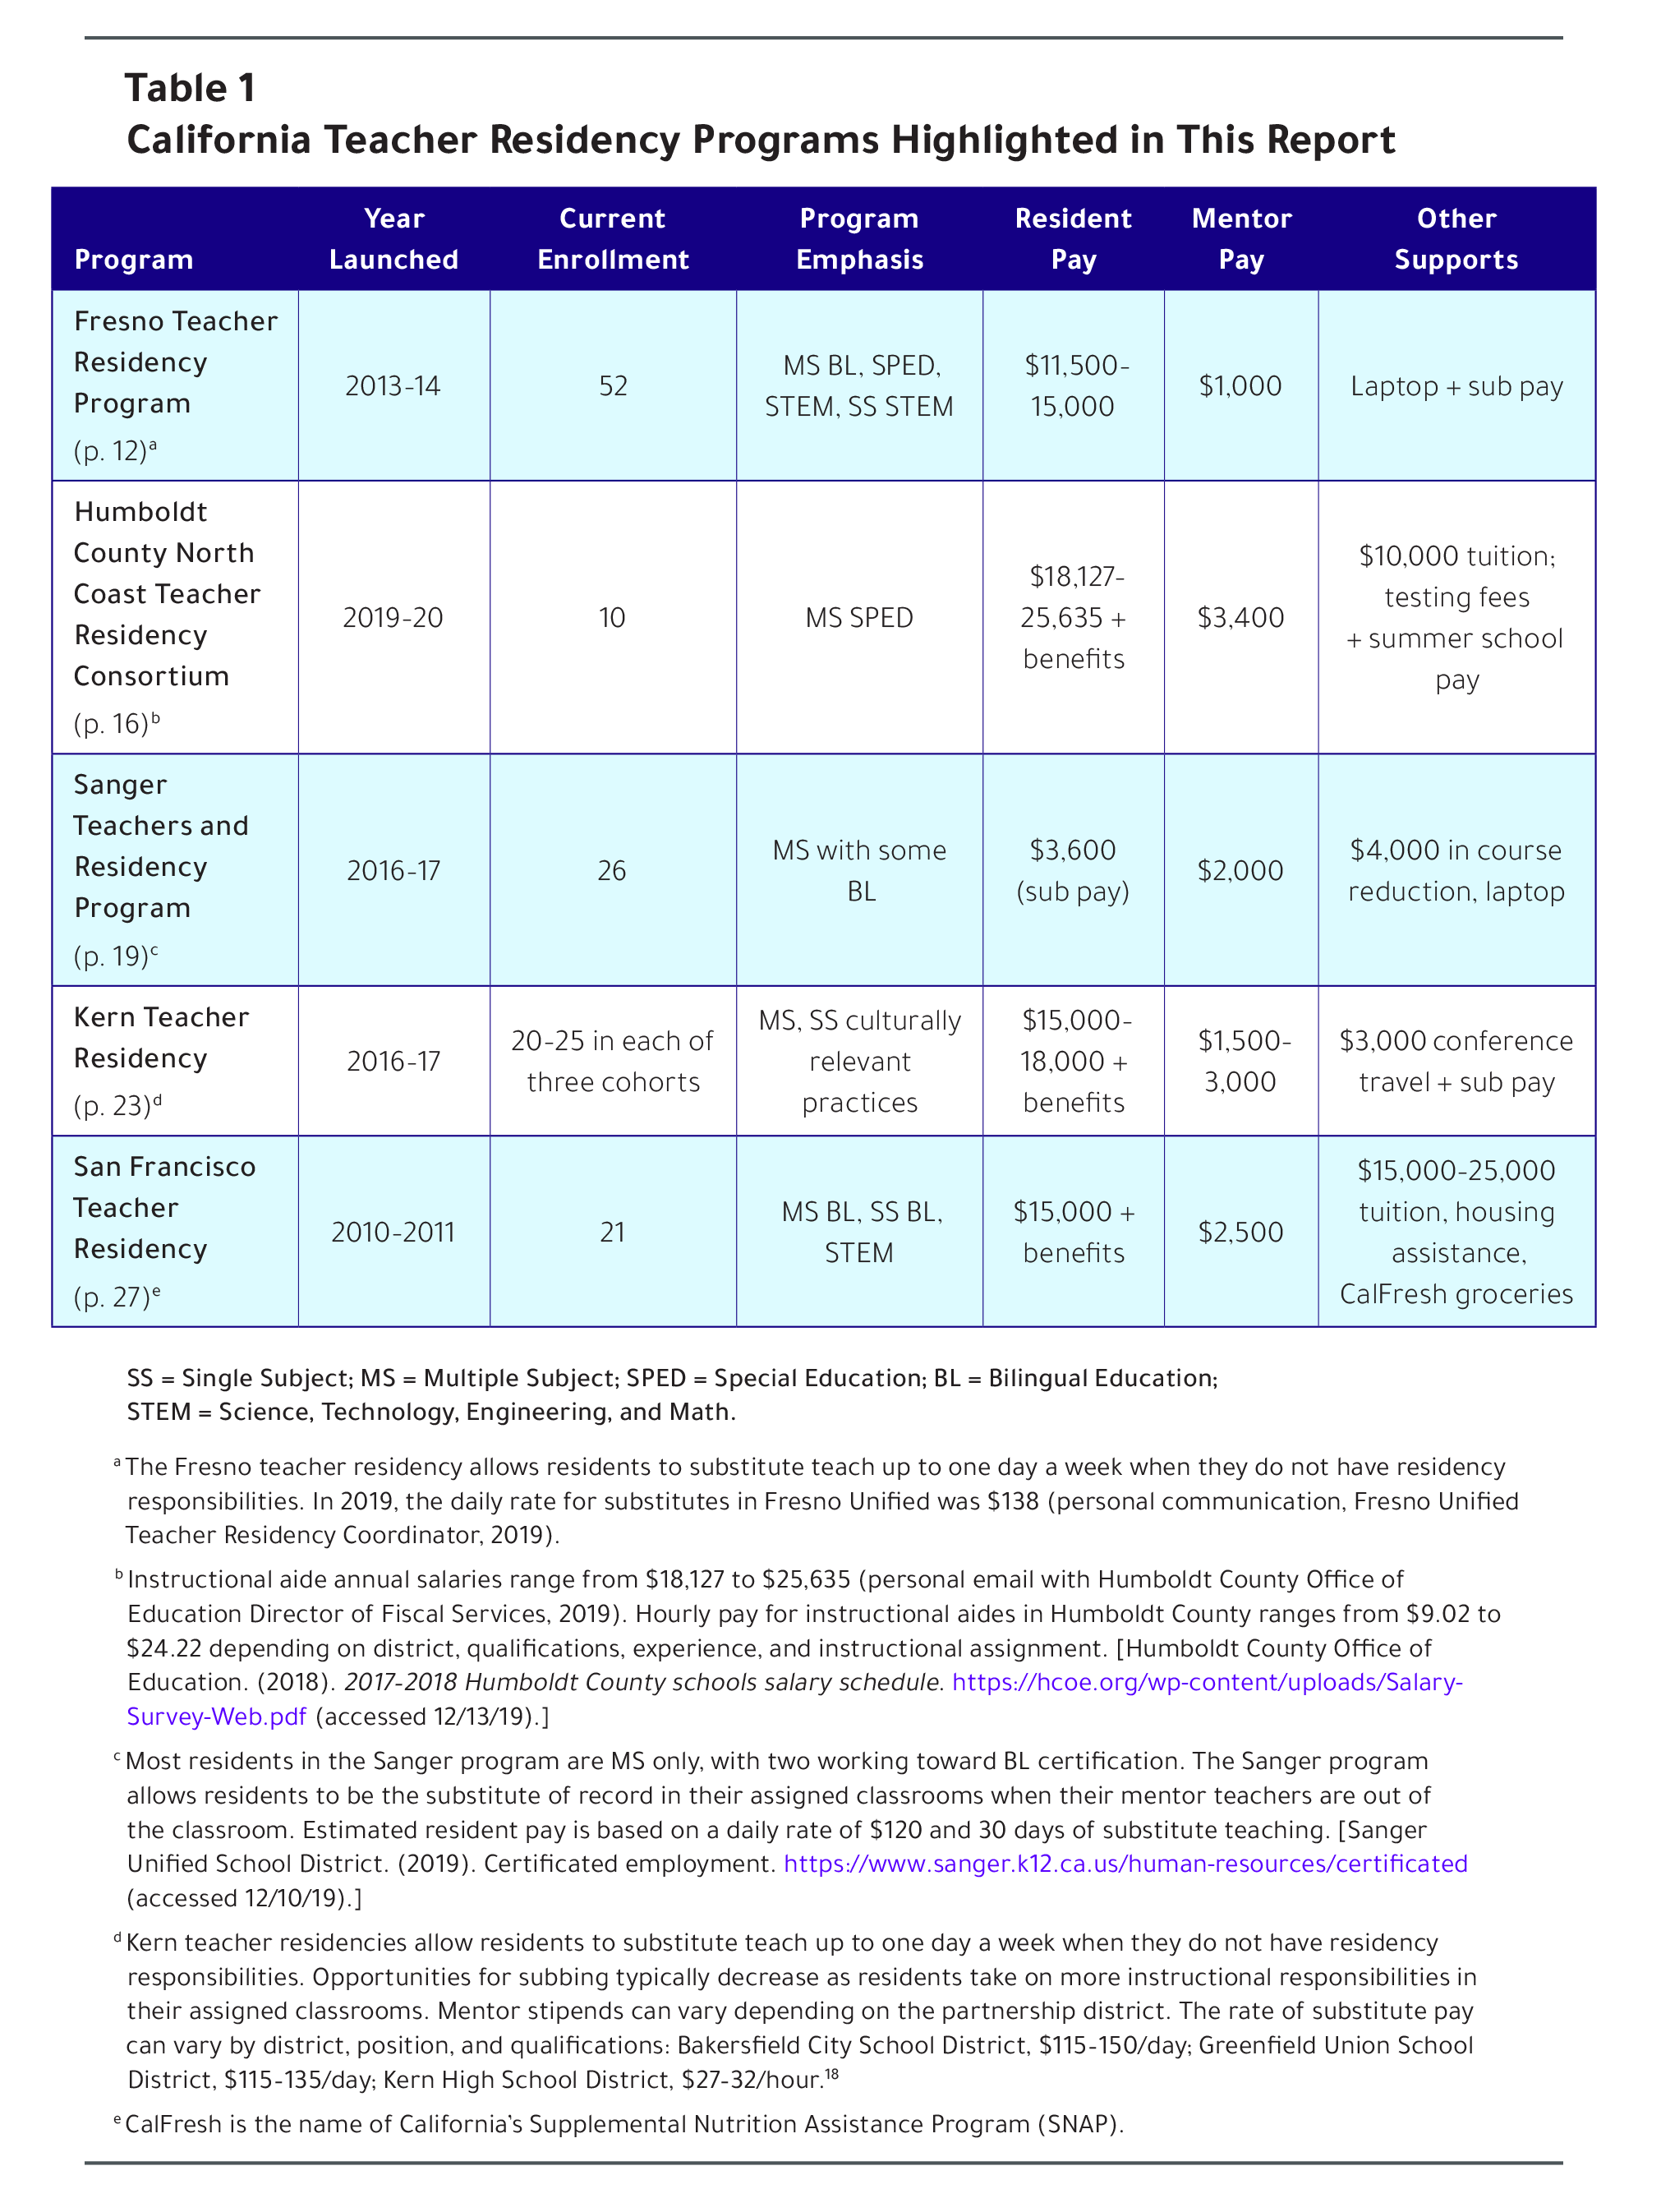 CA Teacher Residencies Table 1